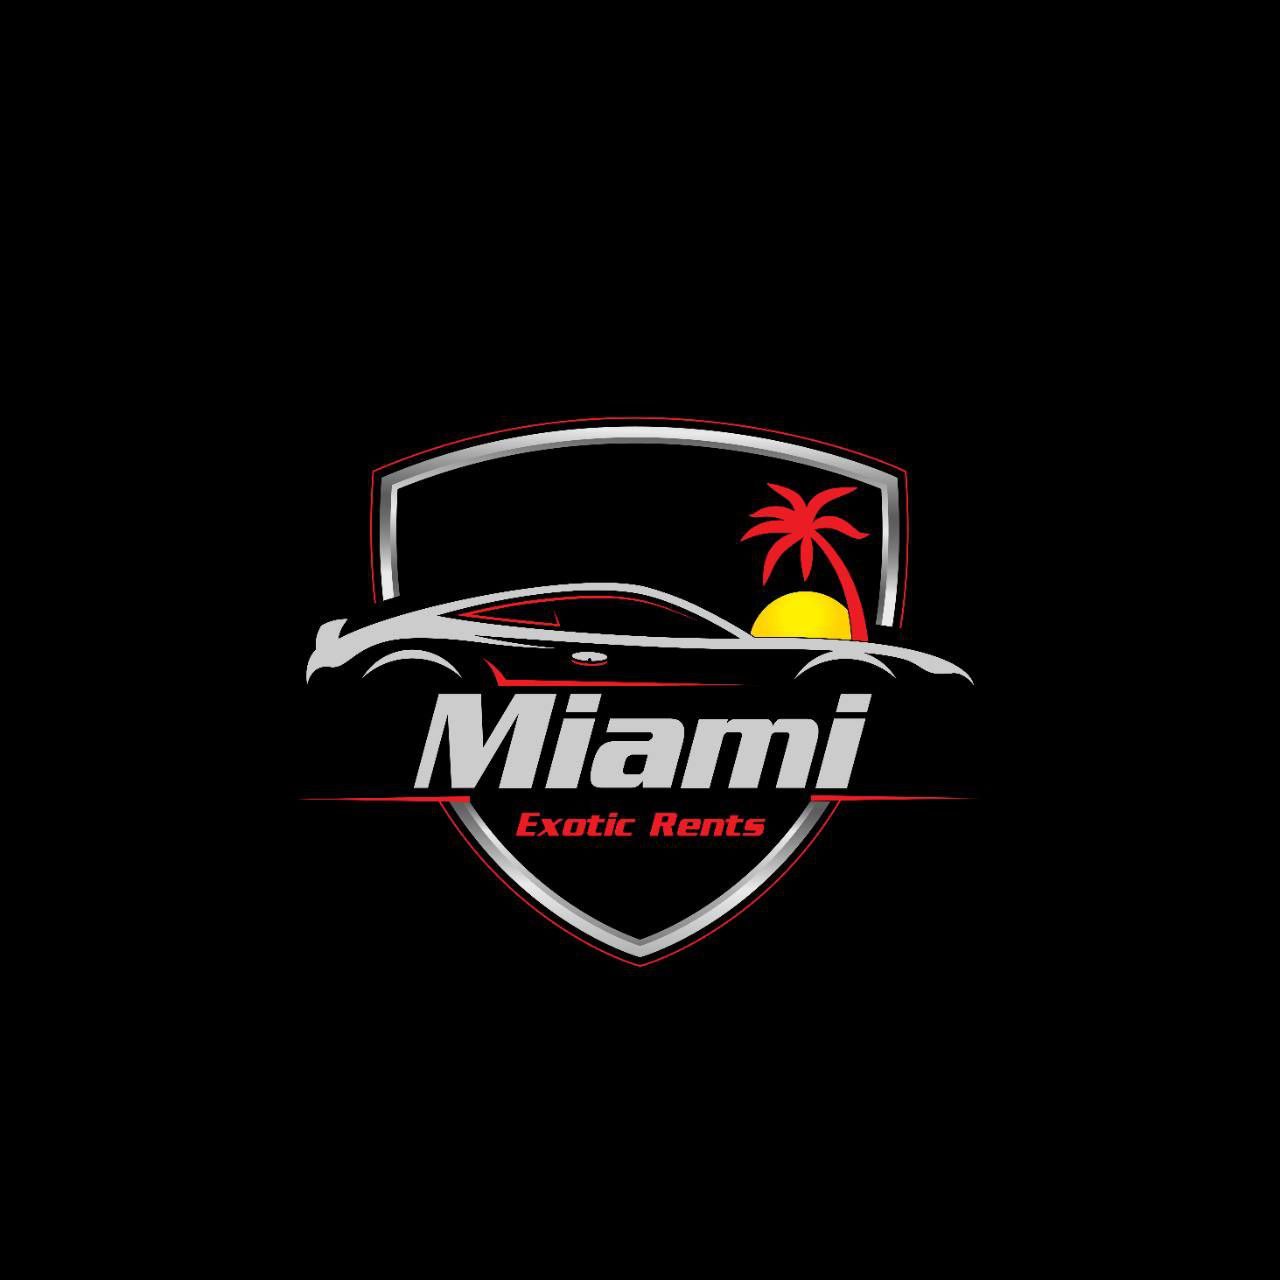 Miami Exotic rents's Logo